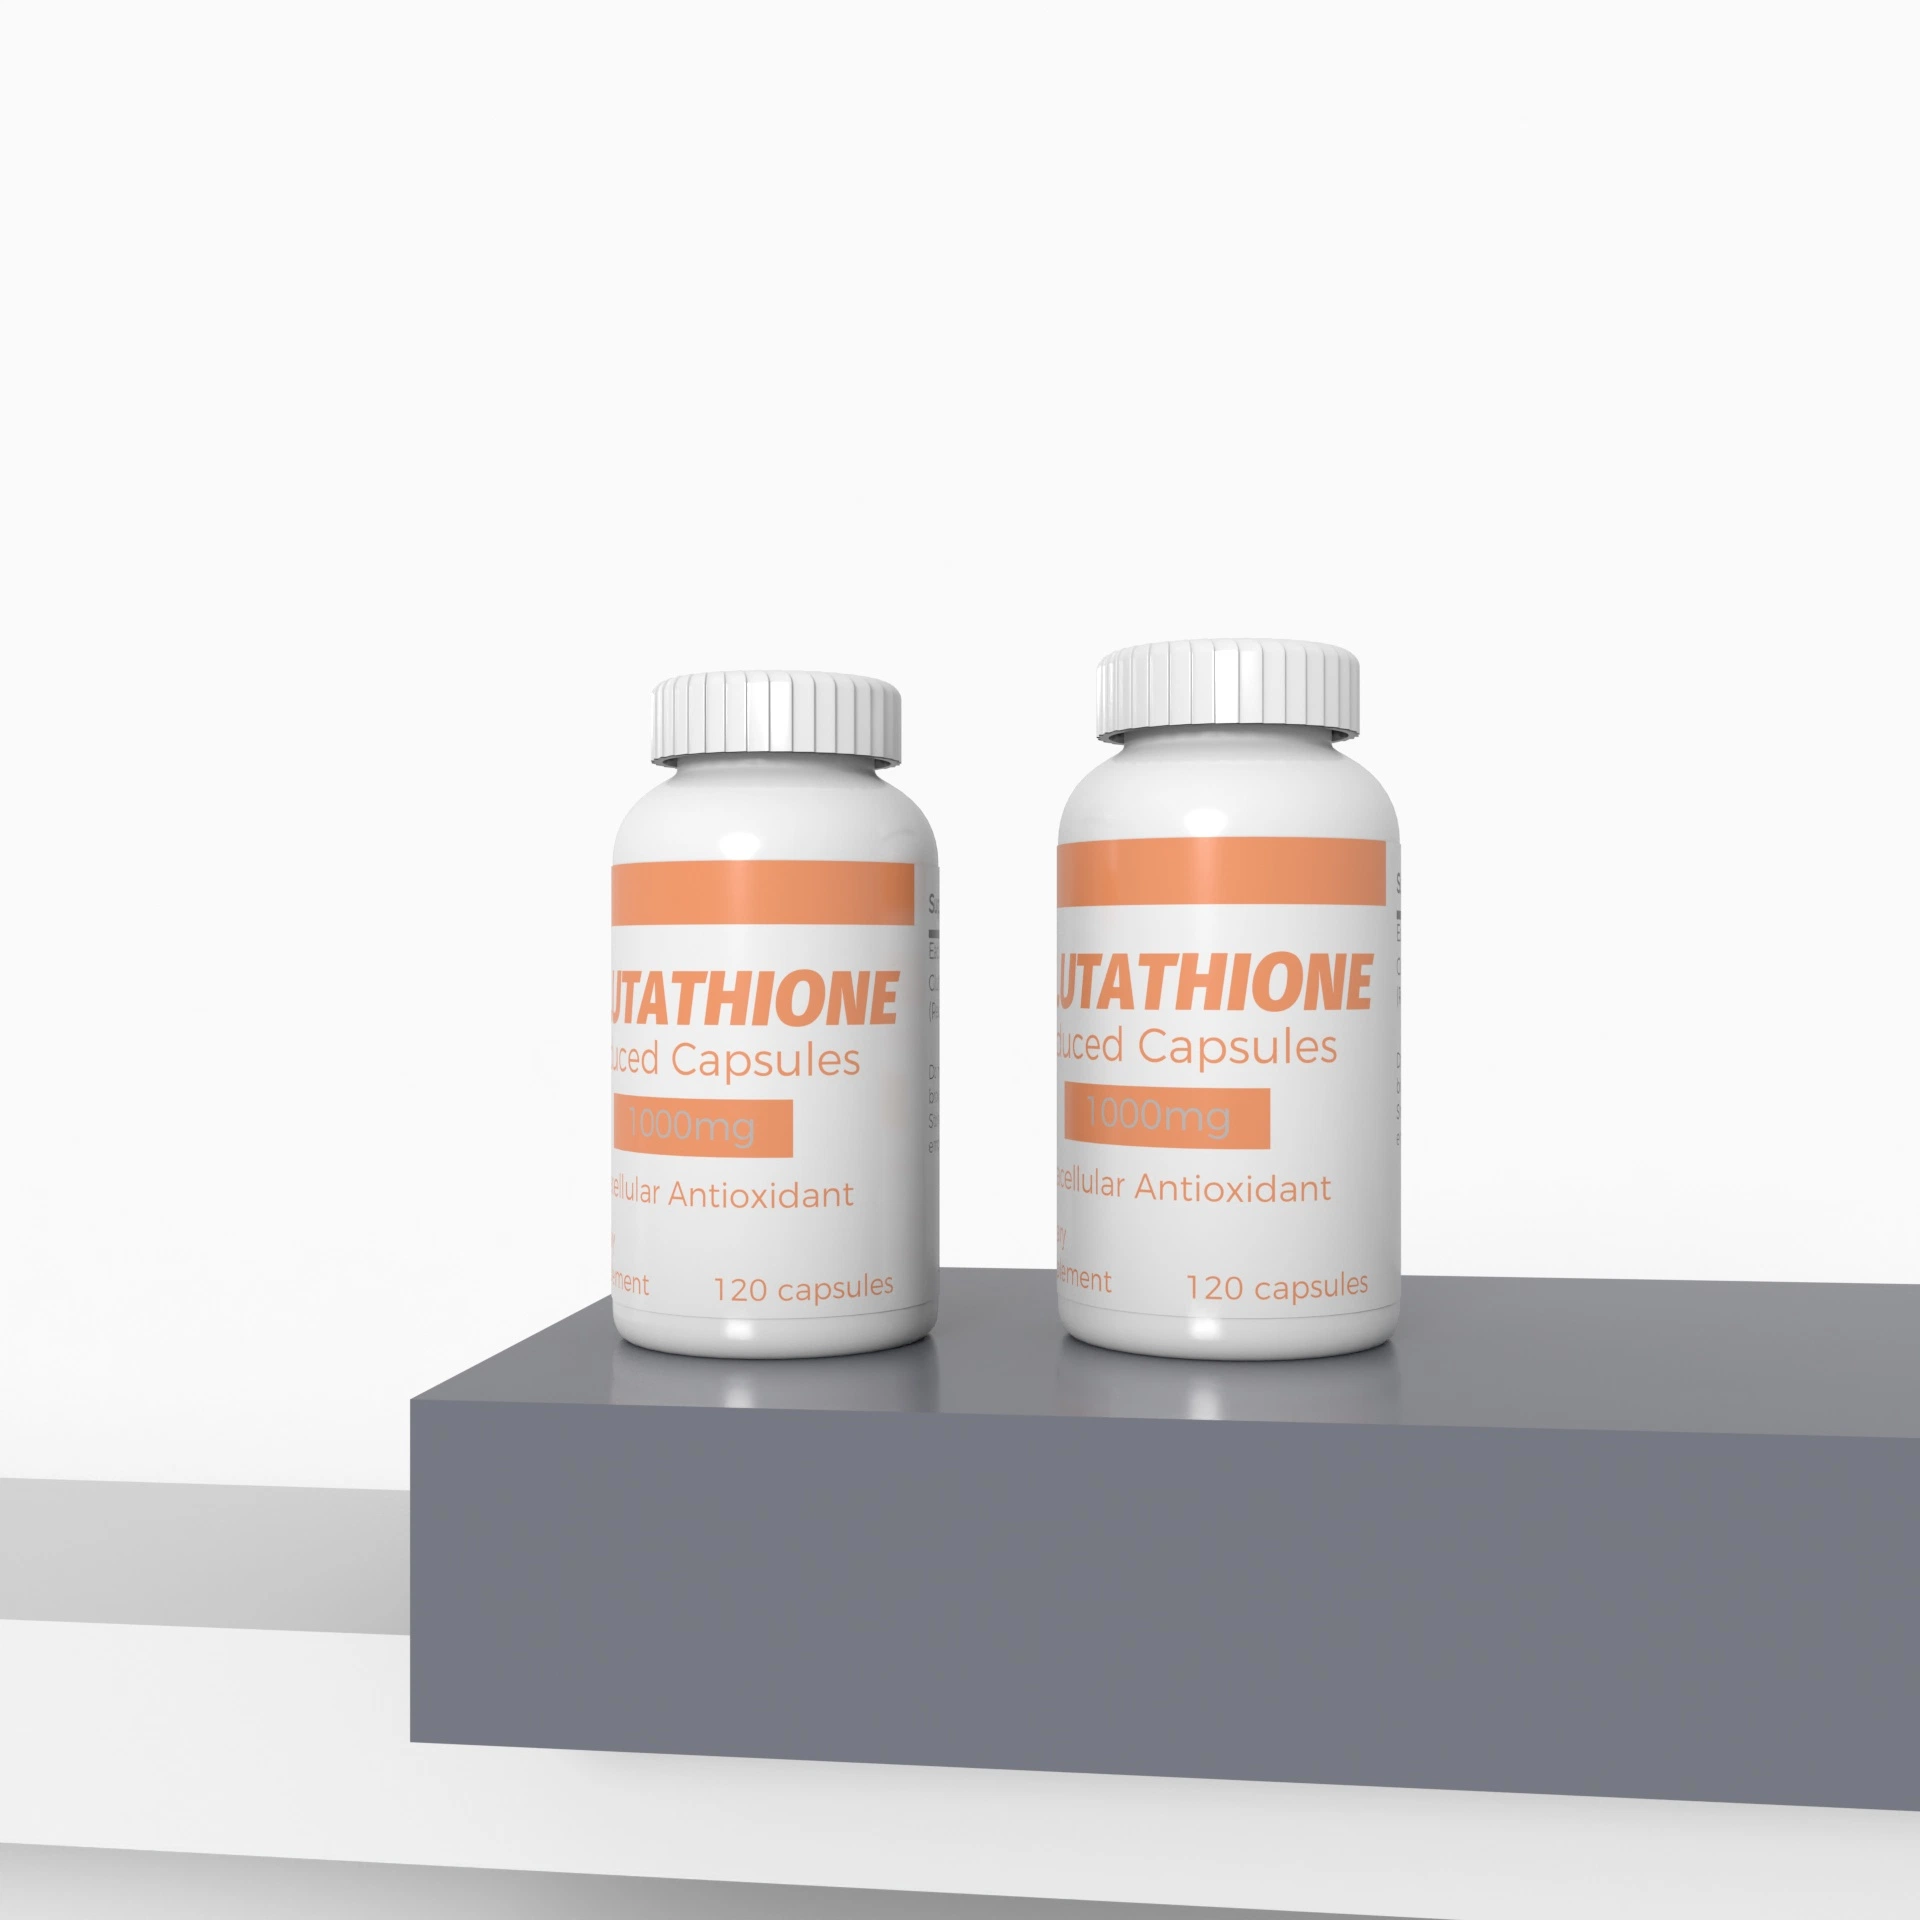 Healthcare Supplement Glutathione 1000mg Capsules Whitening Skin Care Western Drugs for Skin OEM Amino Acid Glutathione